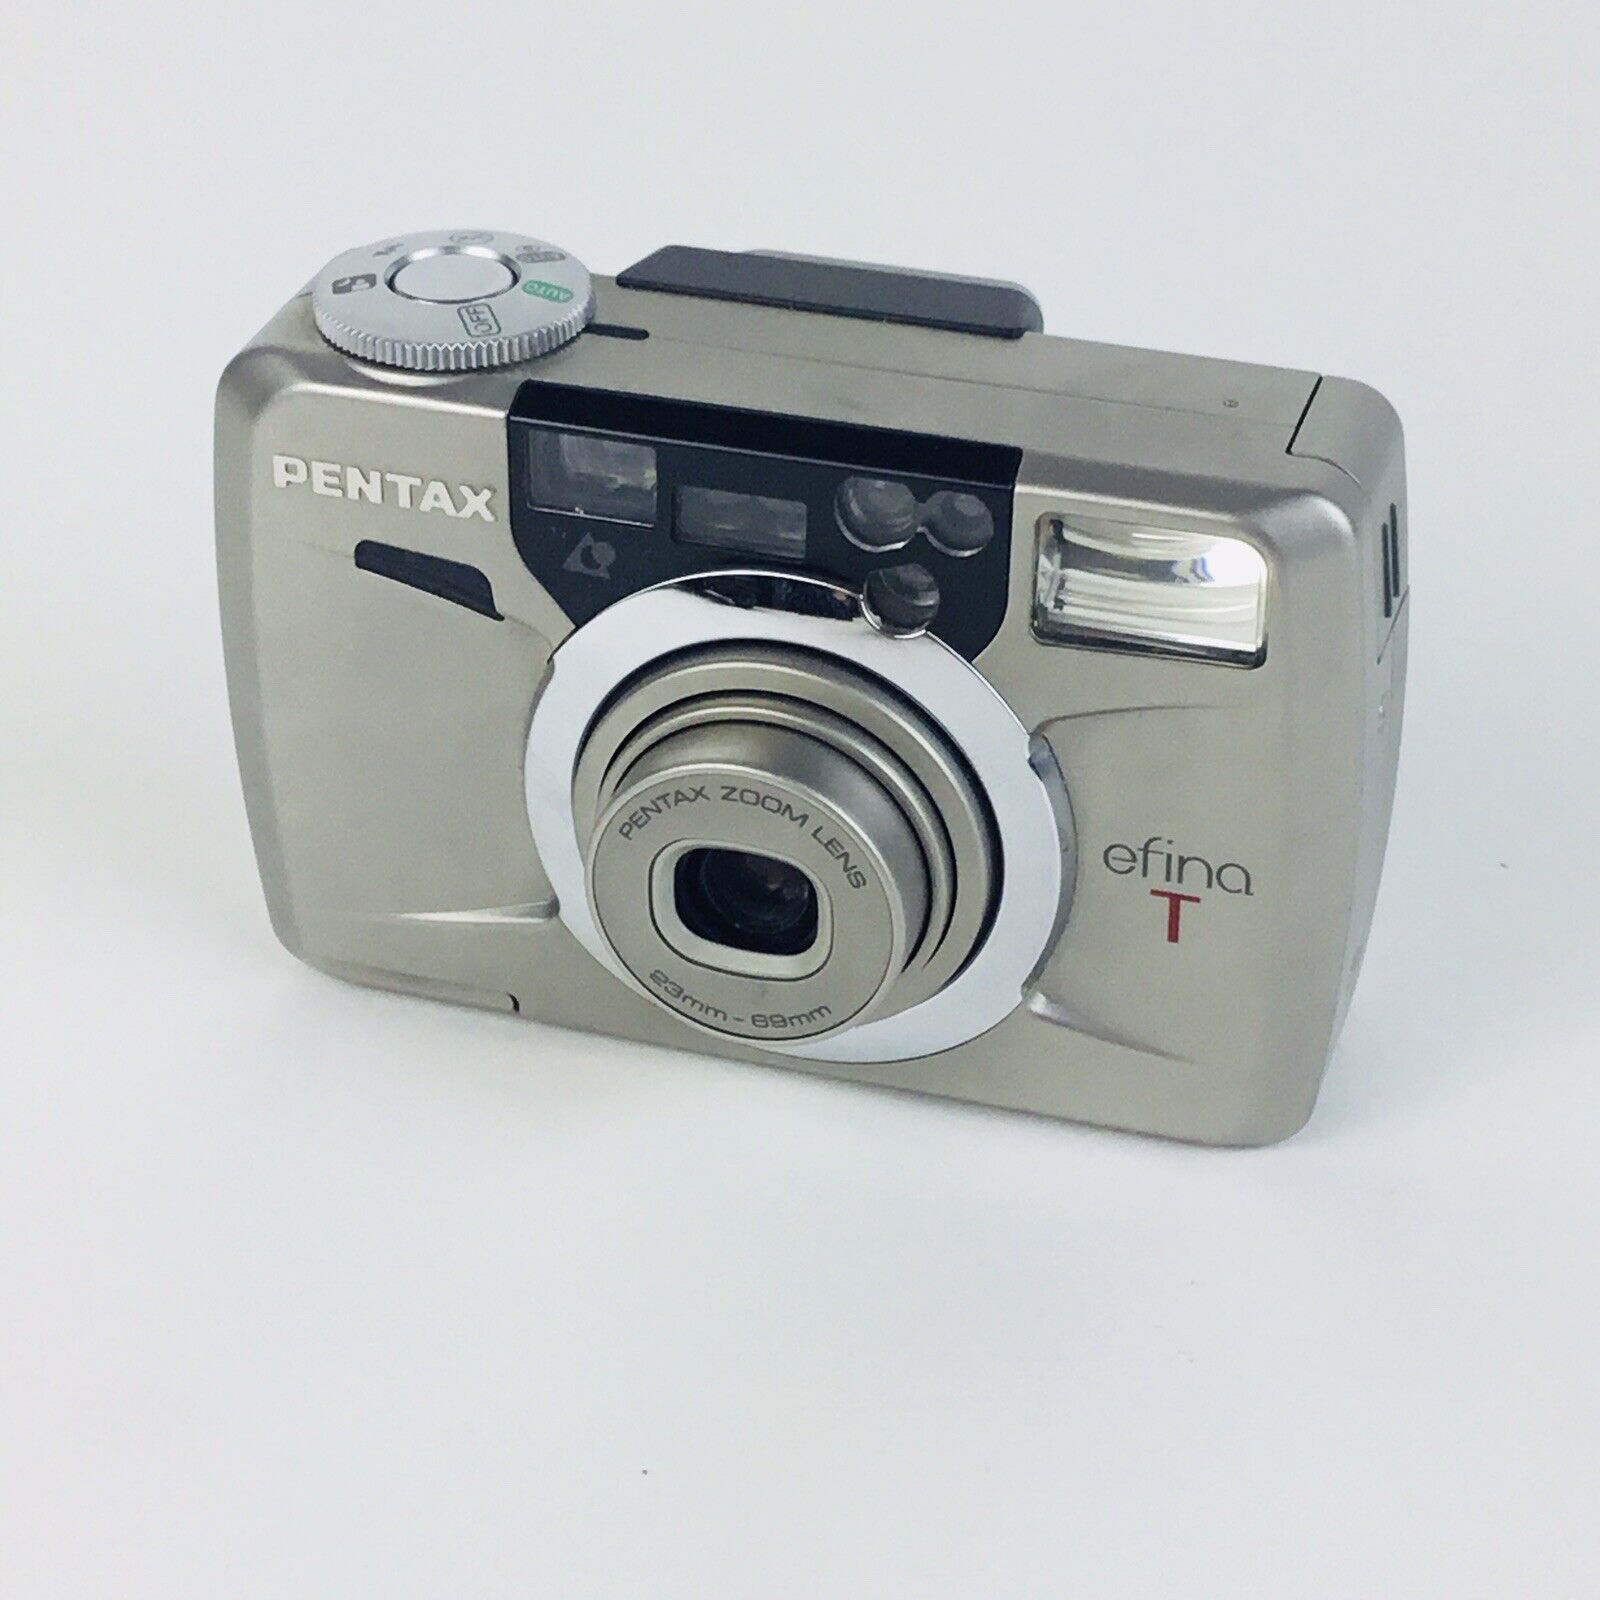 Pentax Efina T APS Film Camera - Tested Working | eBay